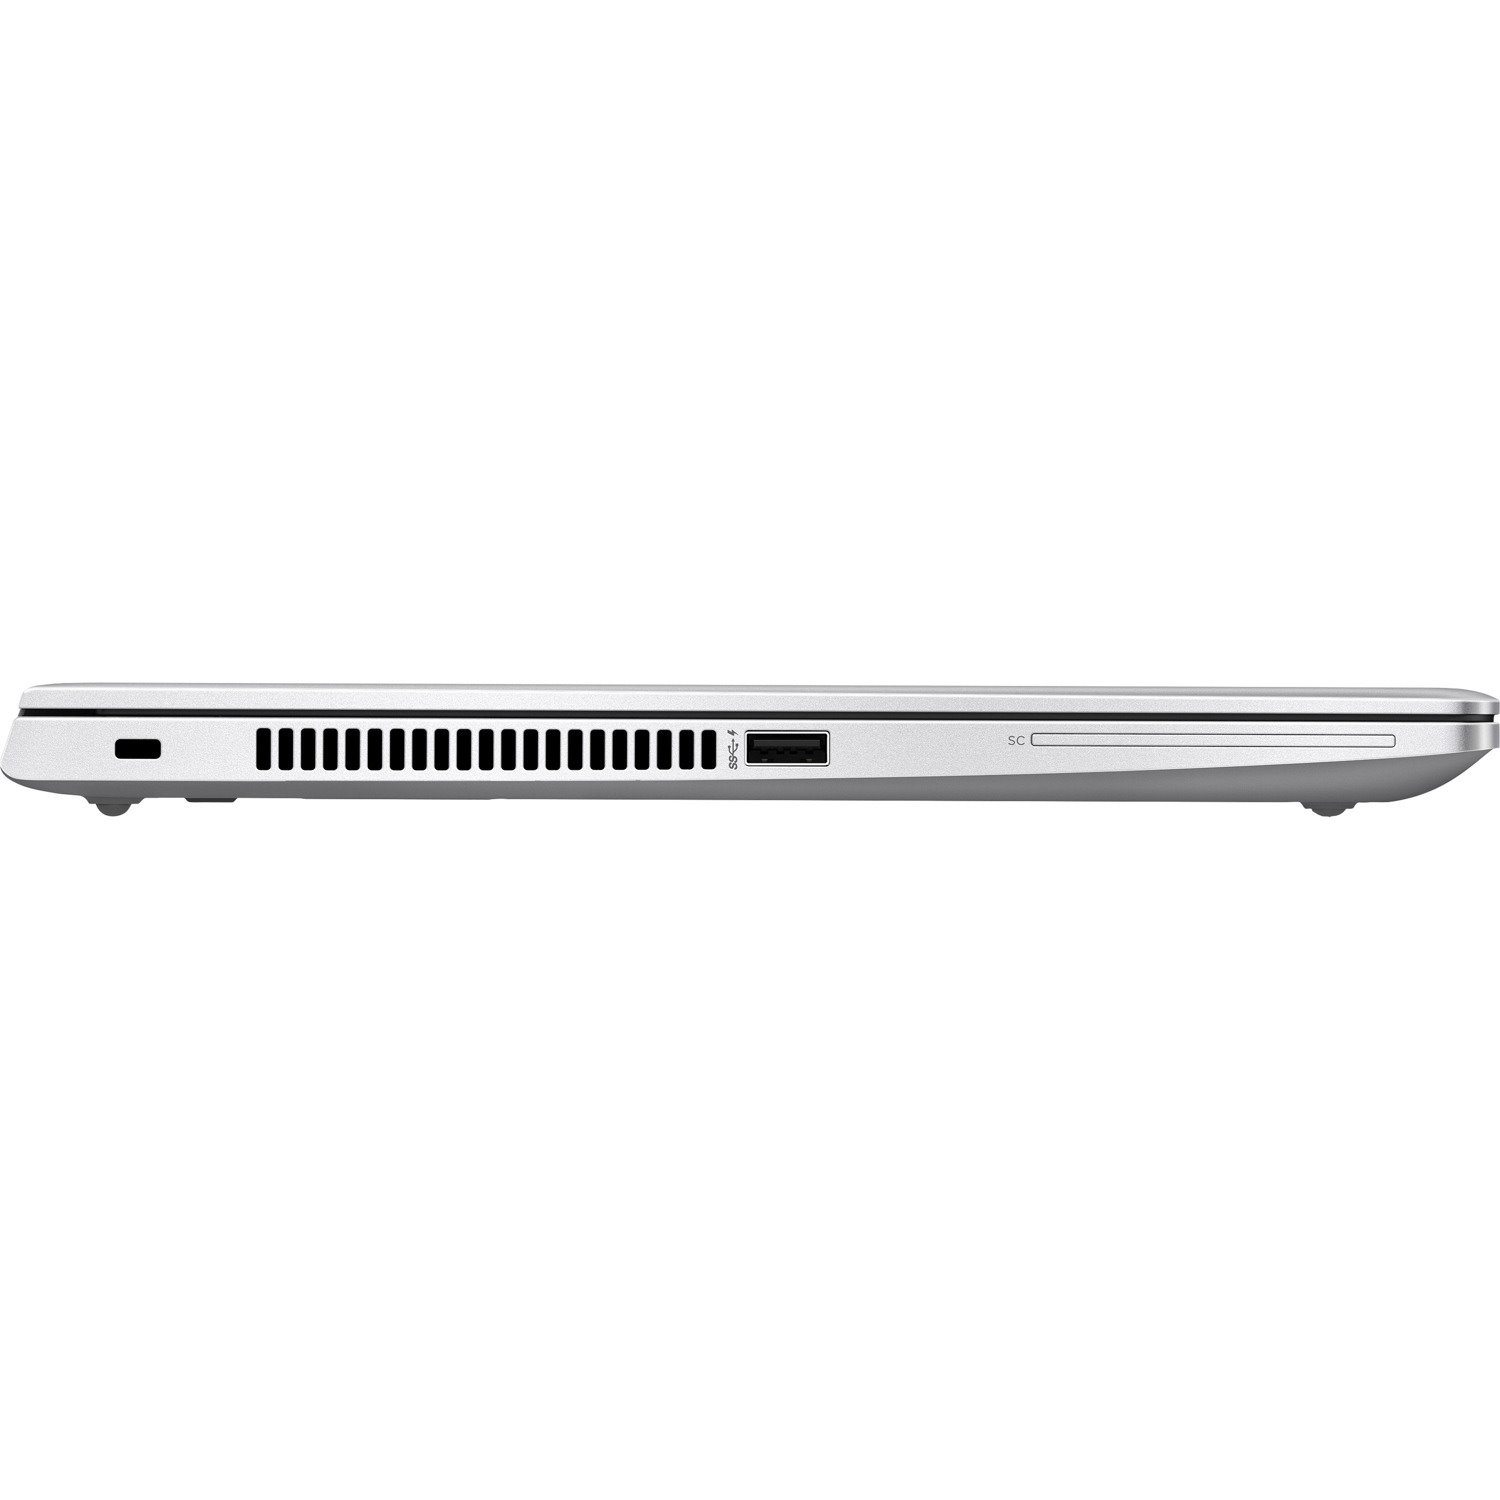 HP EliteBook x360 830 G6 13.3" Touchscreen Convertible 2 in 1 Notebook - Intel Core i5 8th Gen i5-8265U - 8 GB - 256 GB SSD